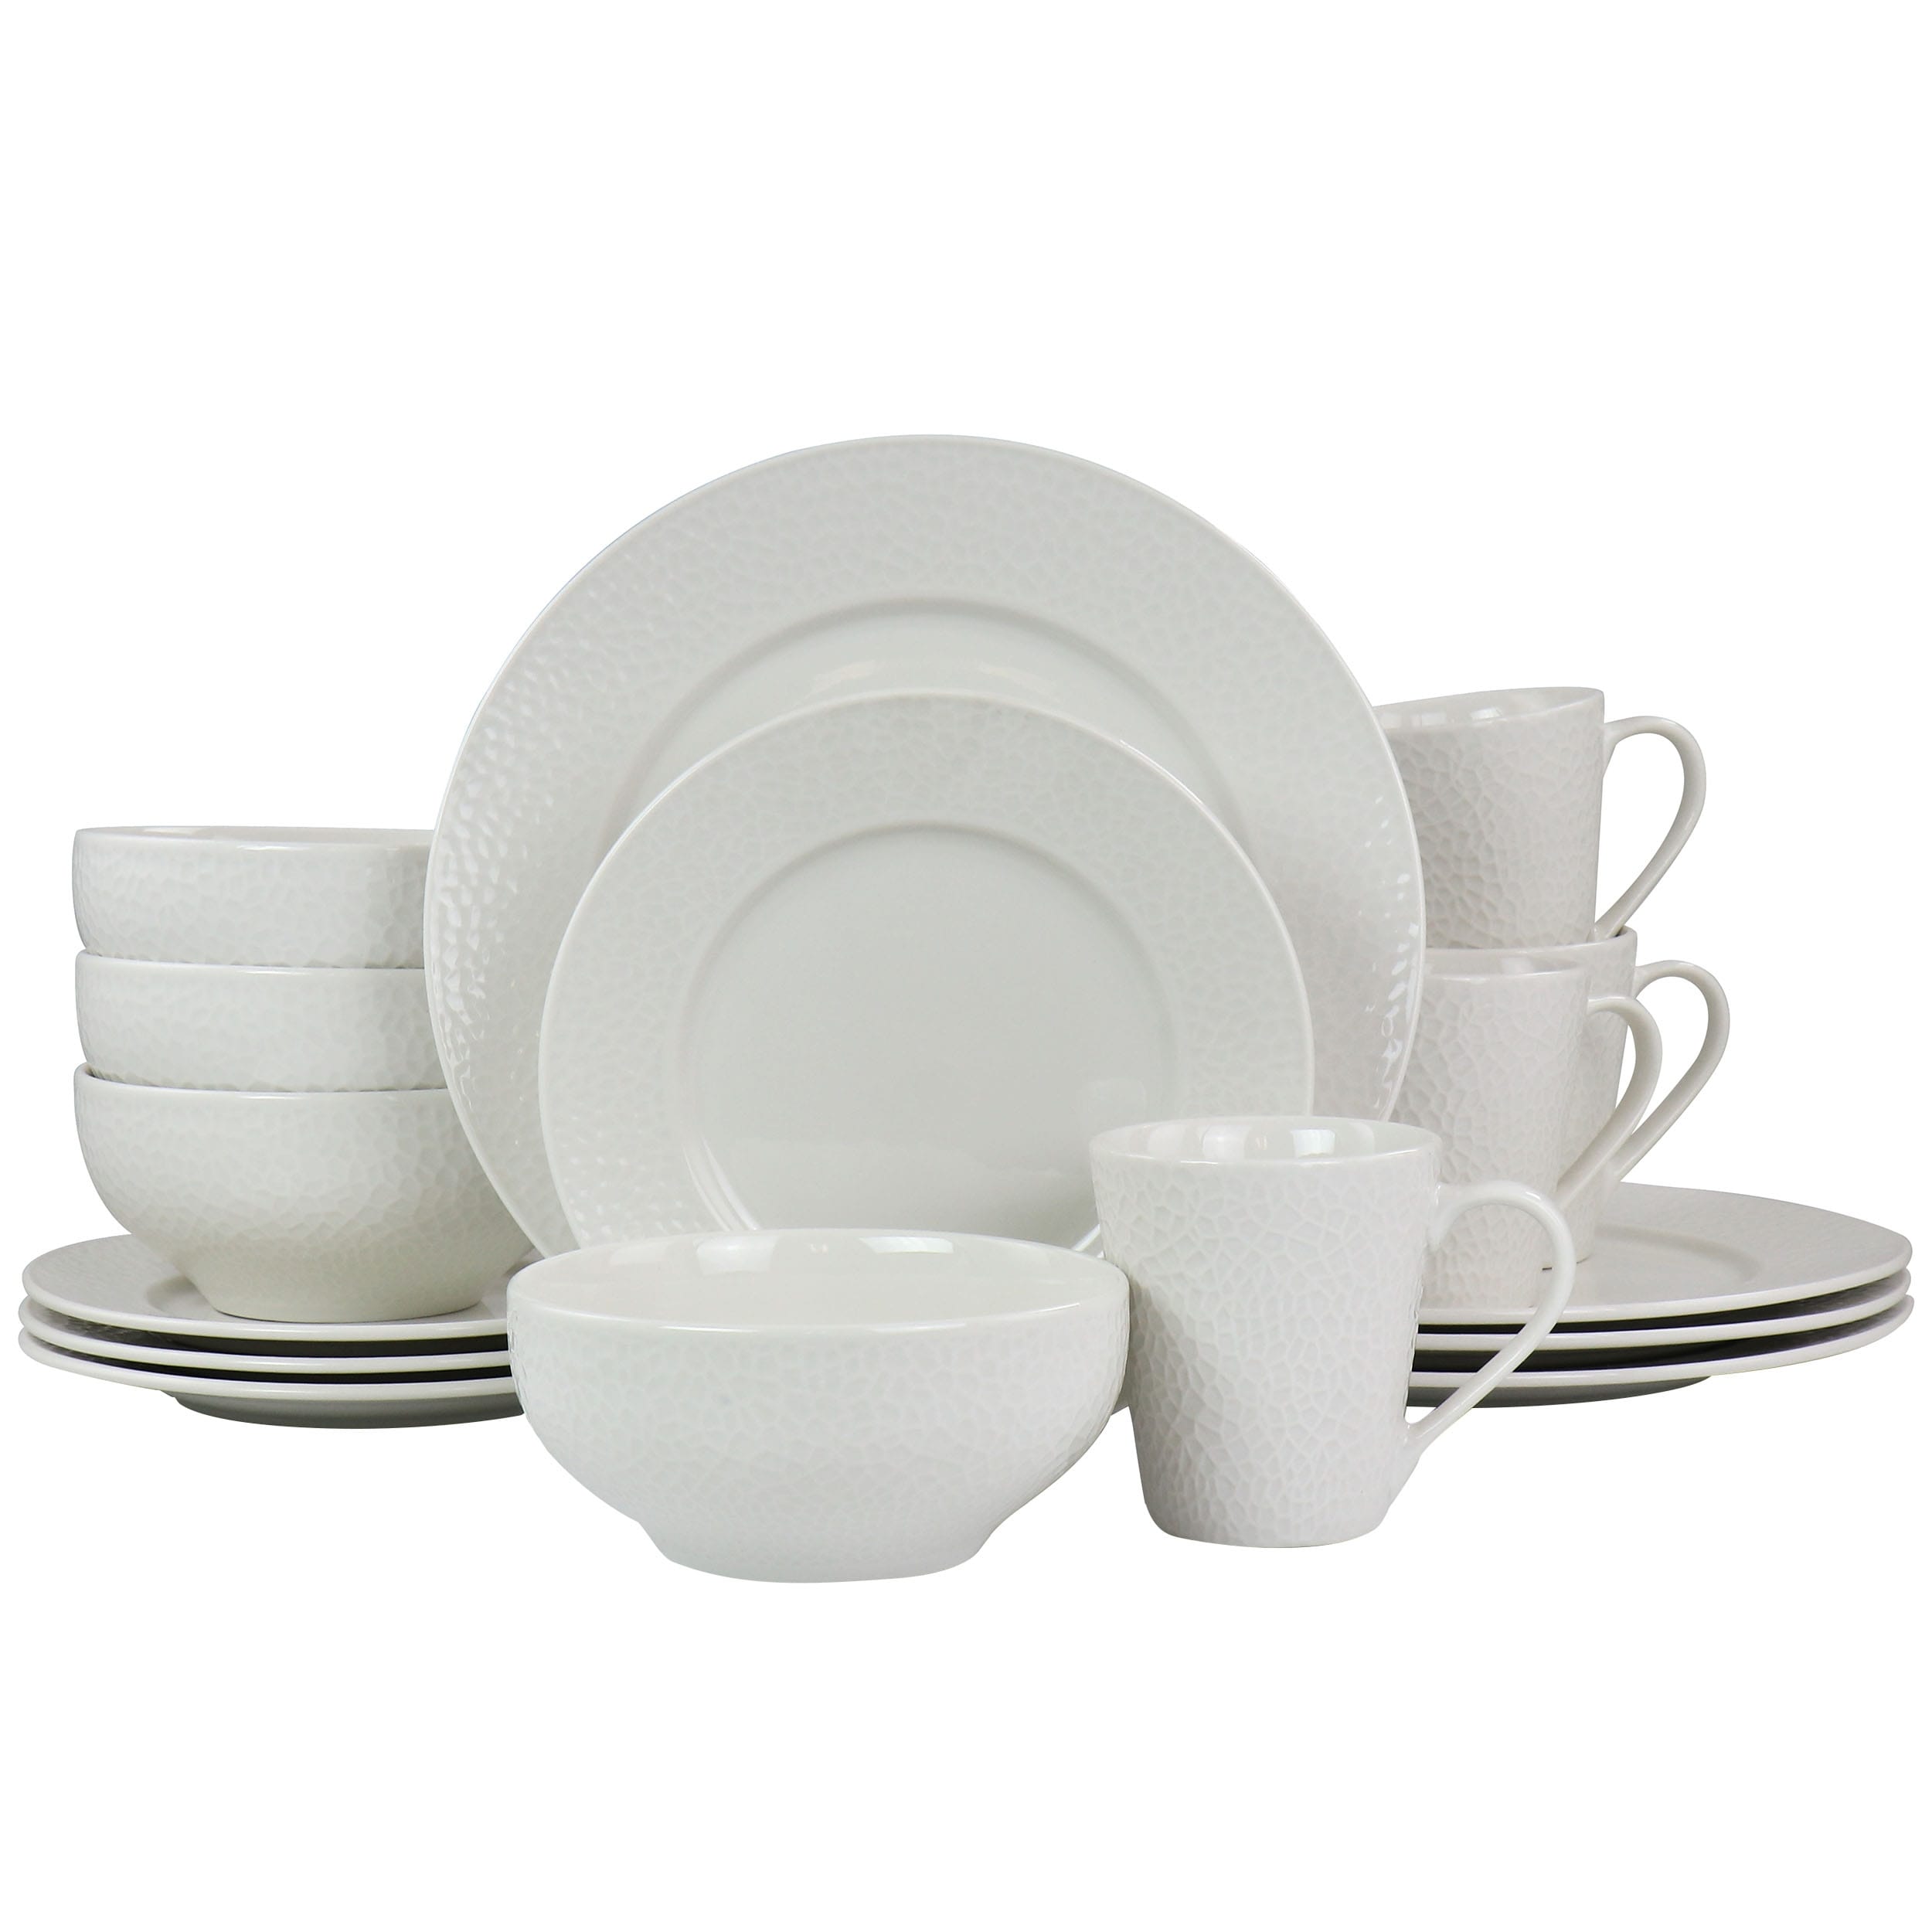 Elama Jasmine 16 Piece Porcelain Dinnerware Set in White - N/A